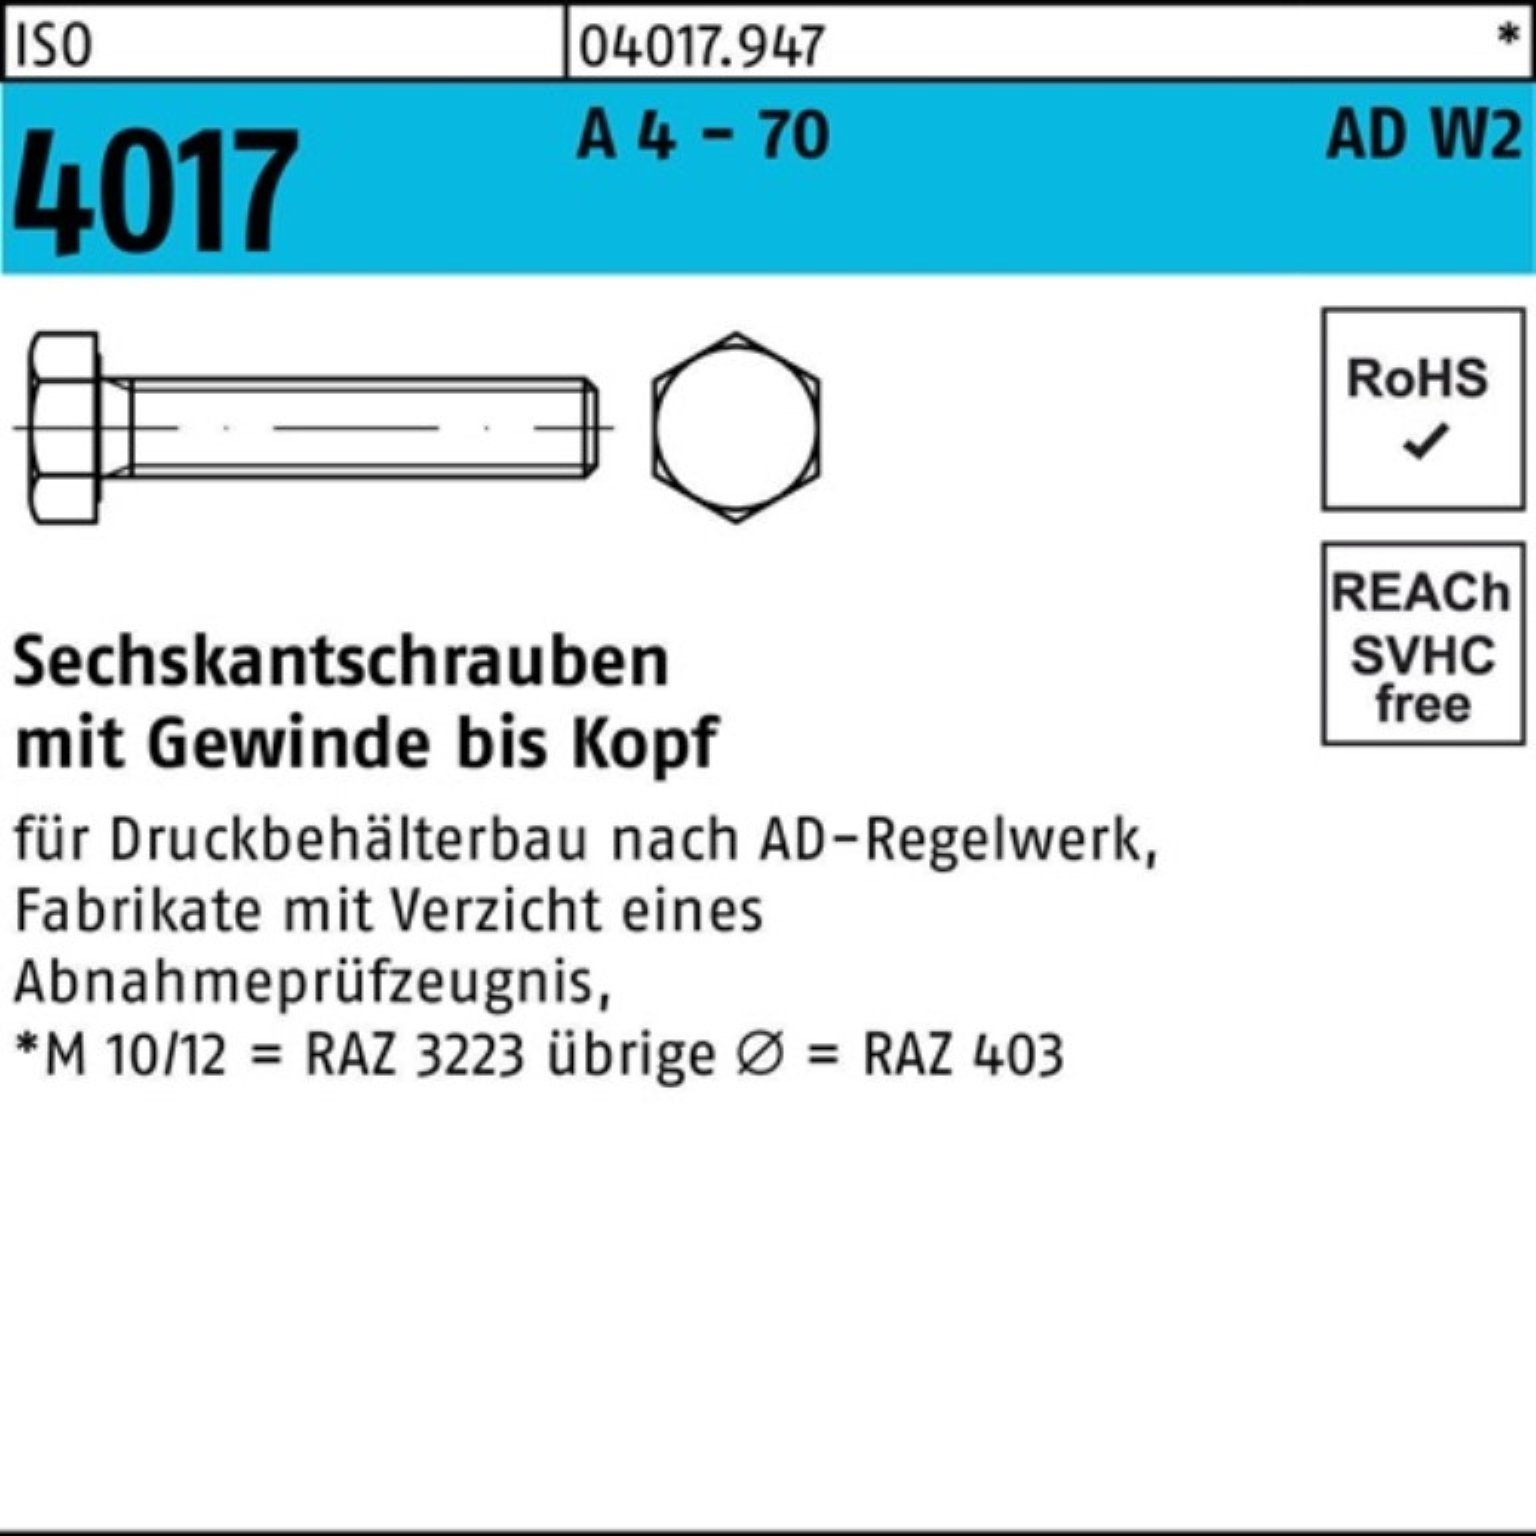 Bufab Sechskantschraube 100er Pack Sechskantschraube ISO 4017 VG M12x 20 A 4 - 70 AD-W2 50 St